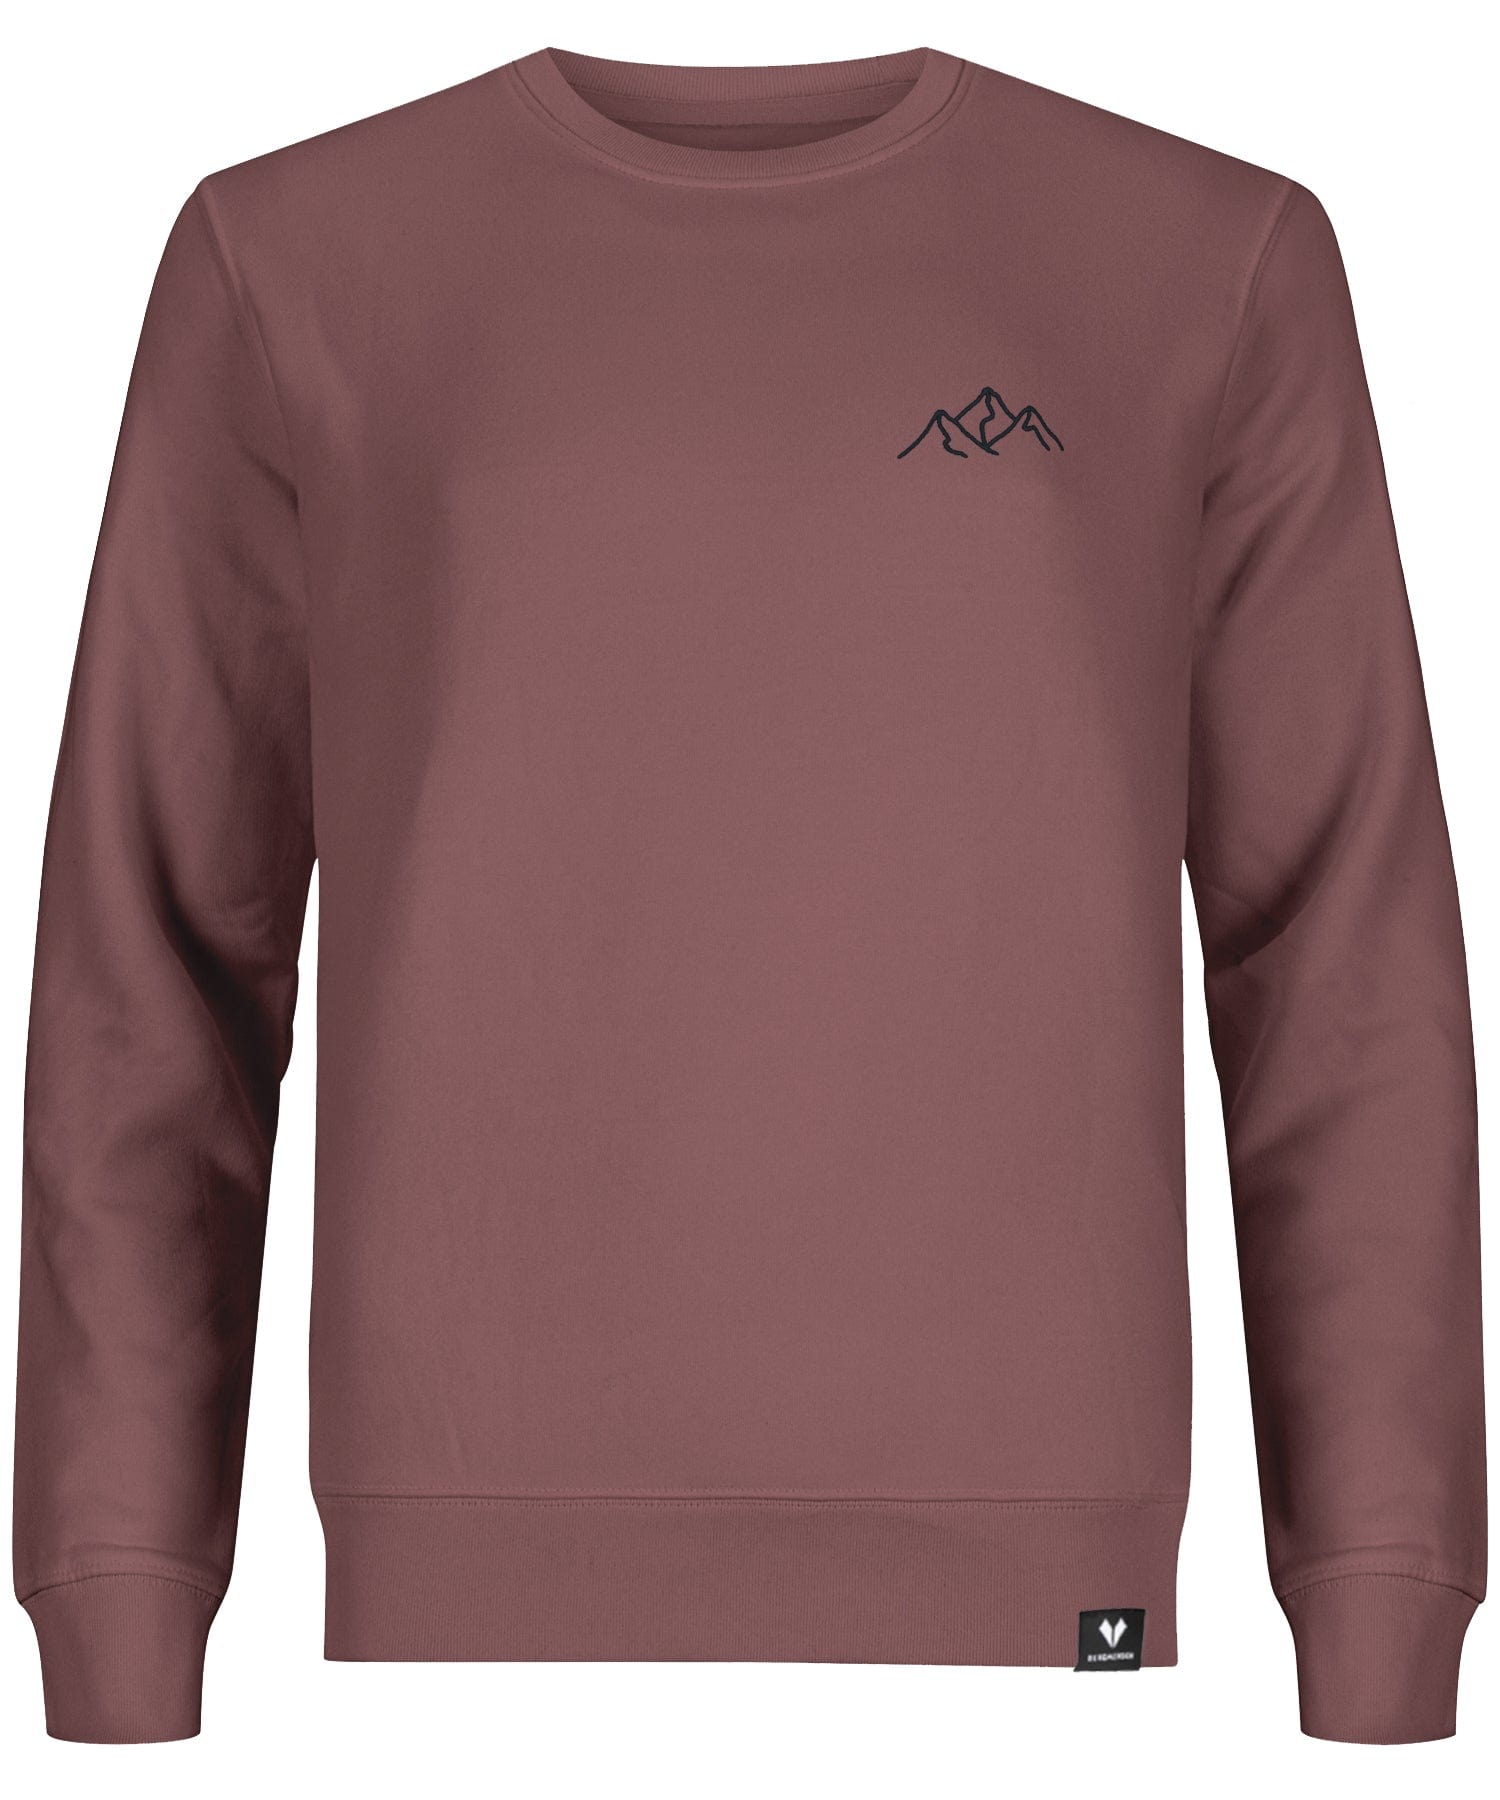 Bergsilhouette (Stick) - Unisex Premium Organic Sweatshirt